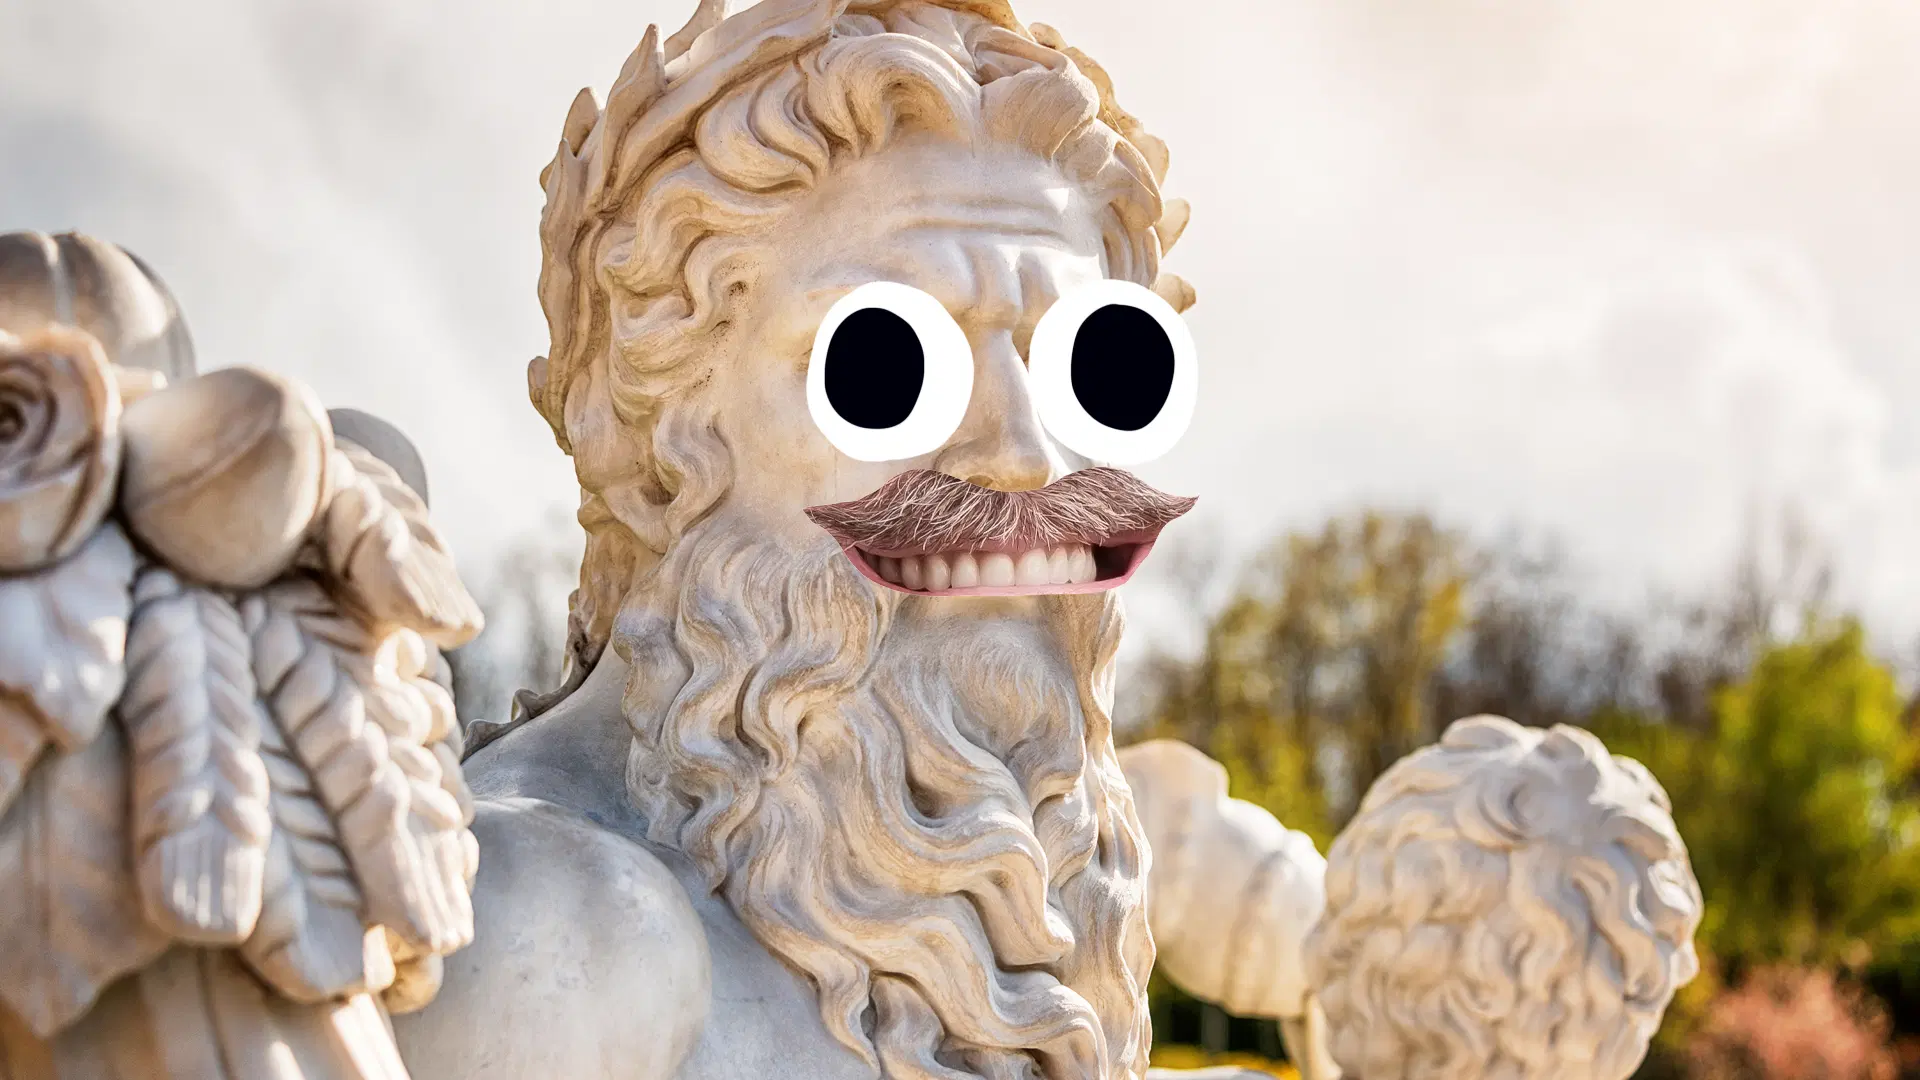 A Greek God statue